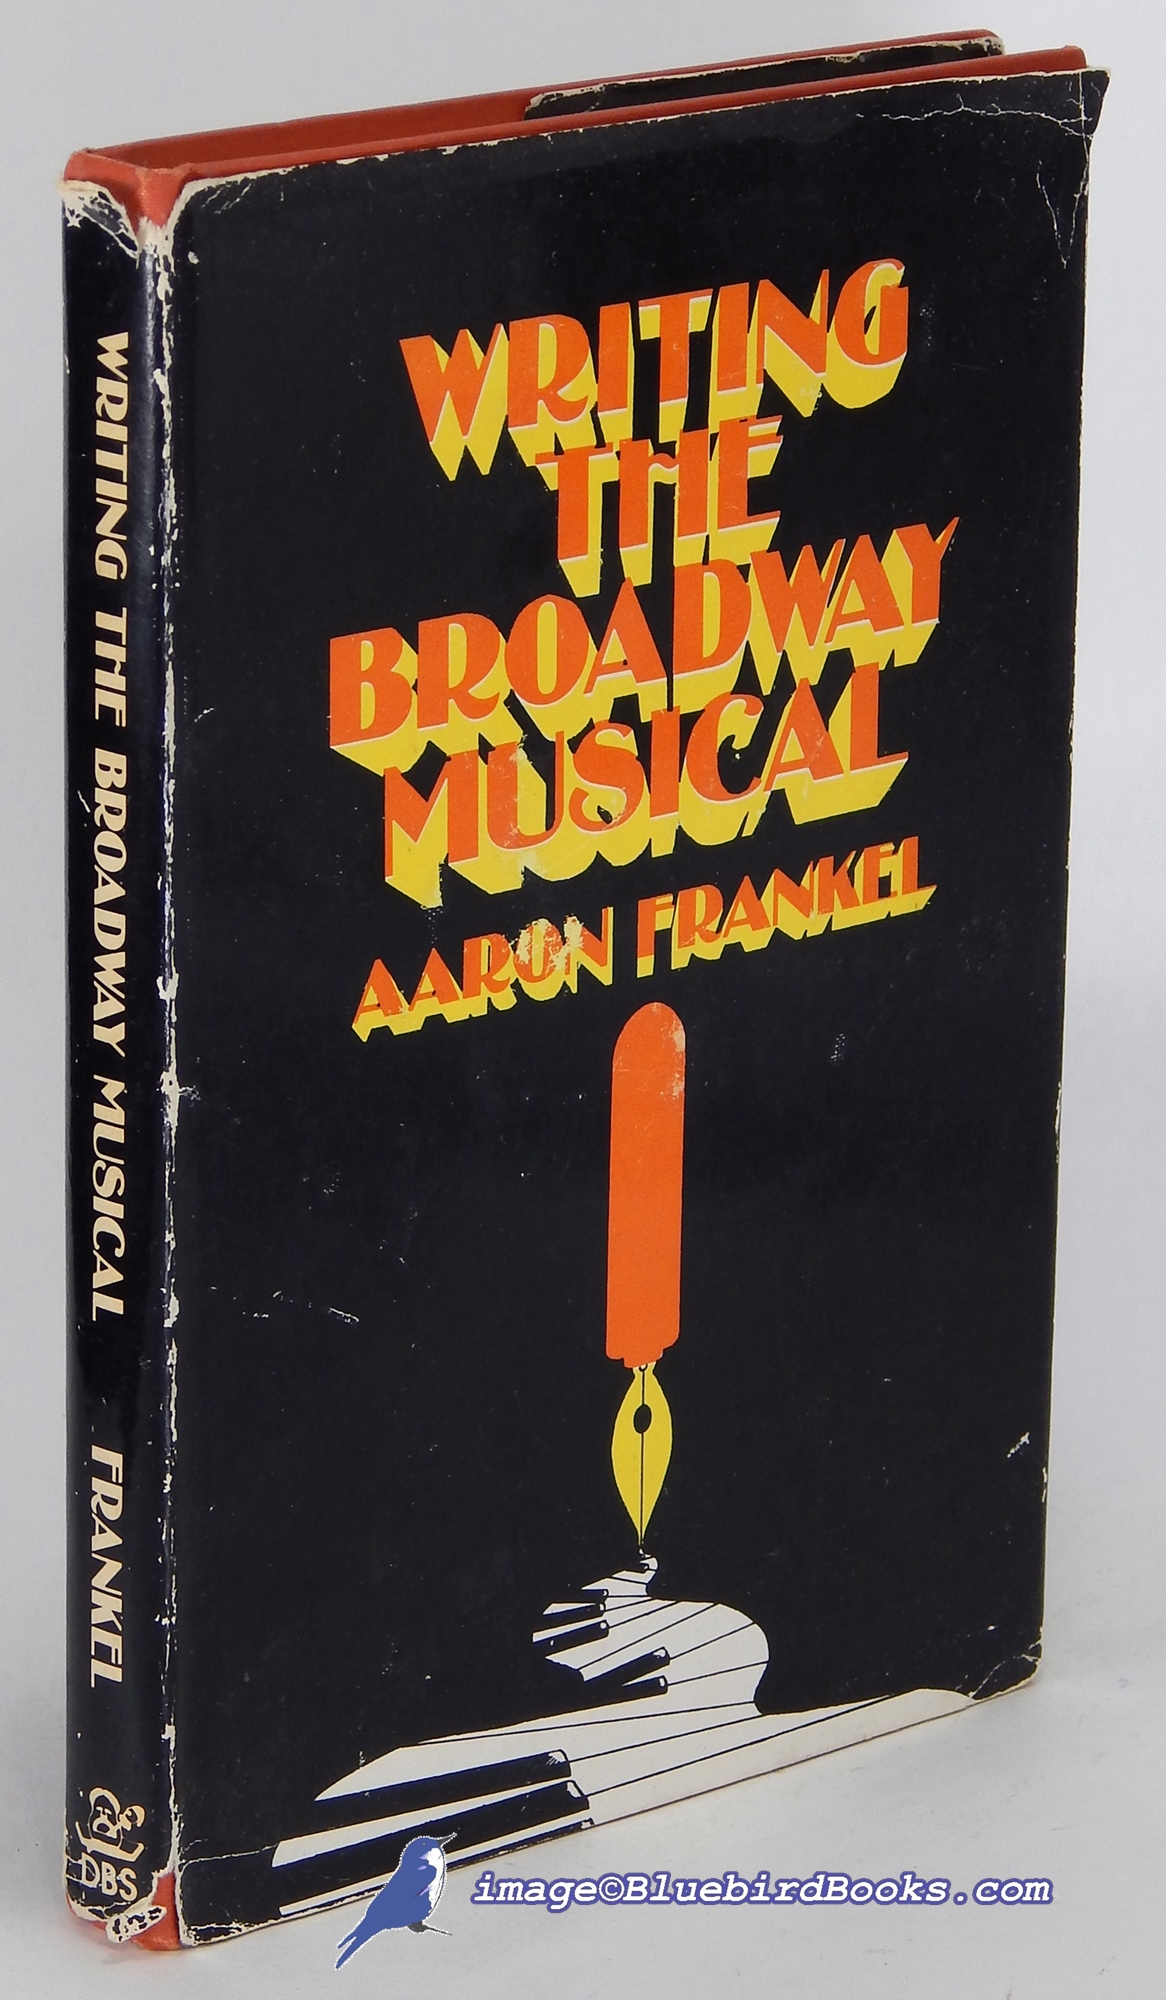 FRANKEL, AARON - Writing the Broadway Musical